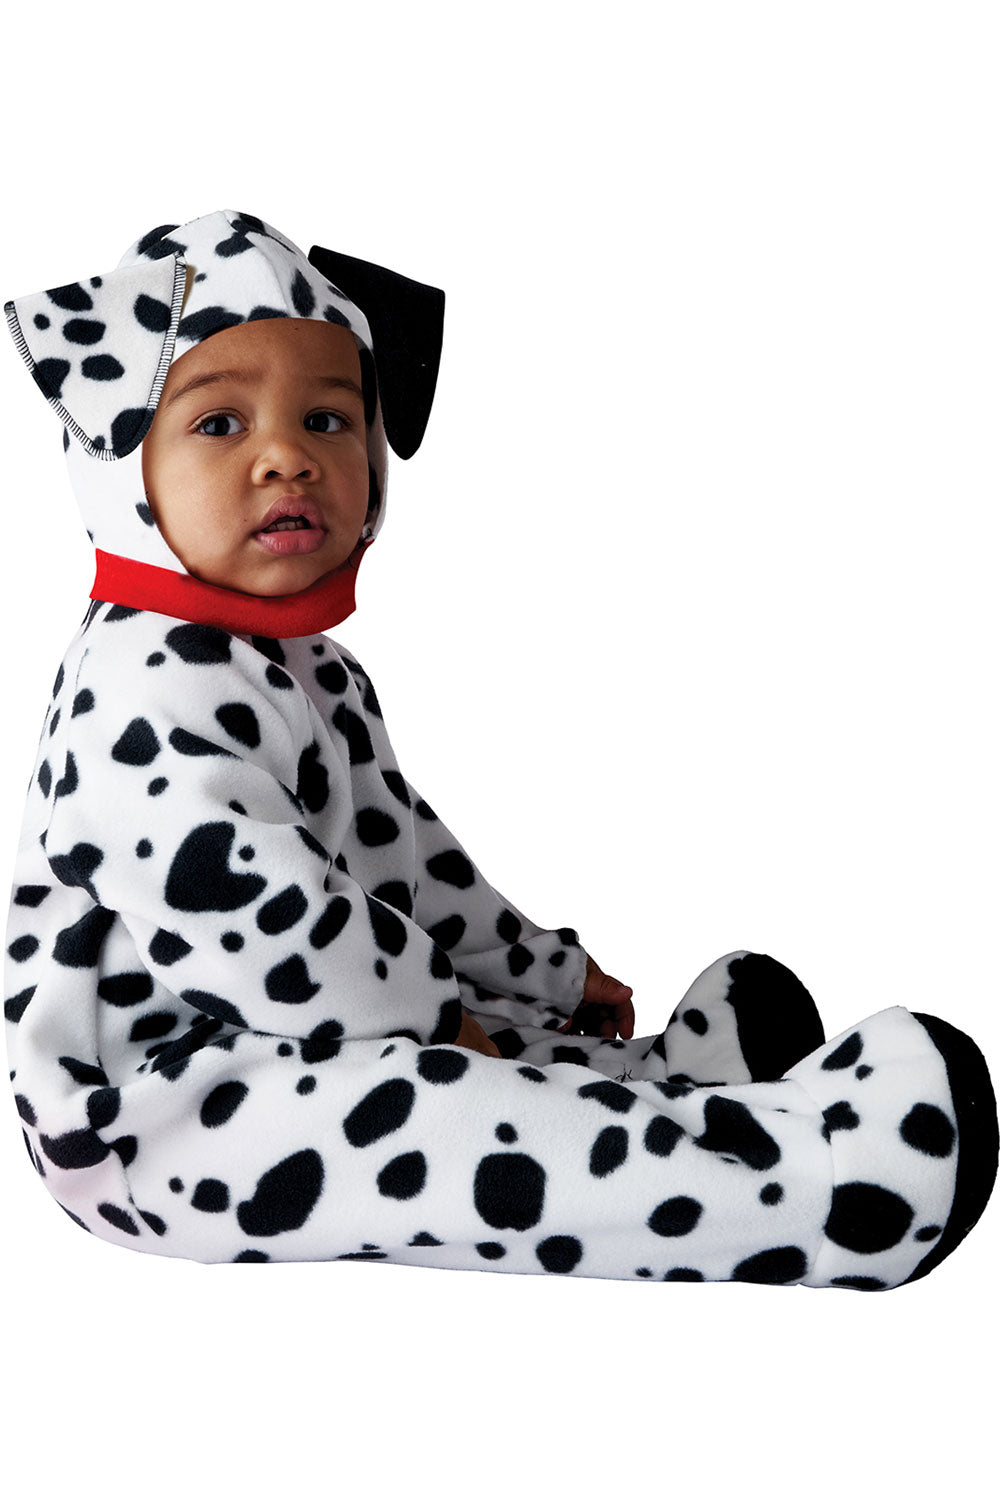 Adorable Dalmatian / Infant California Costume 1221-193